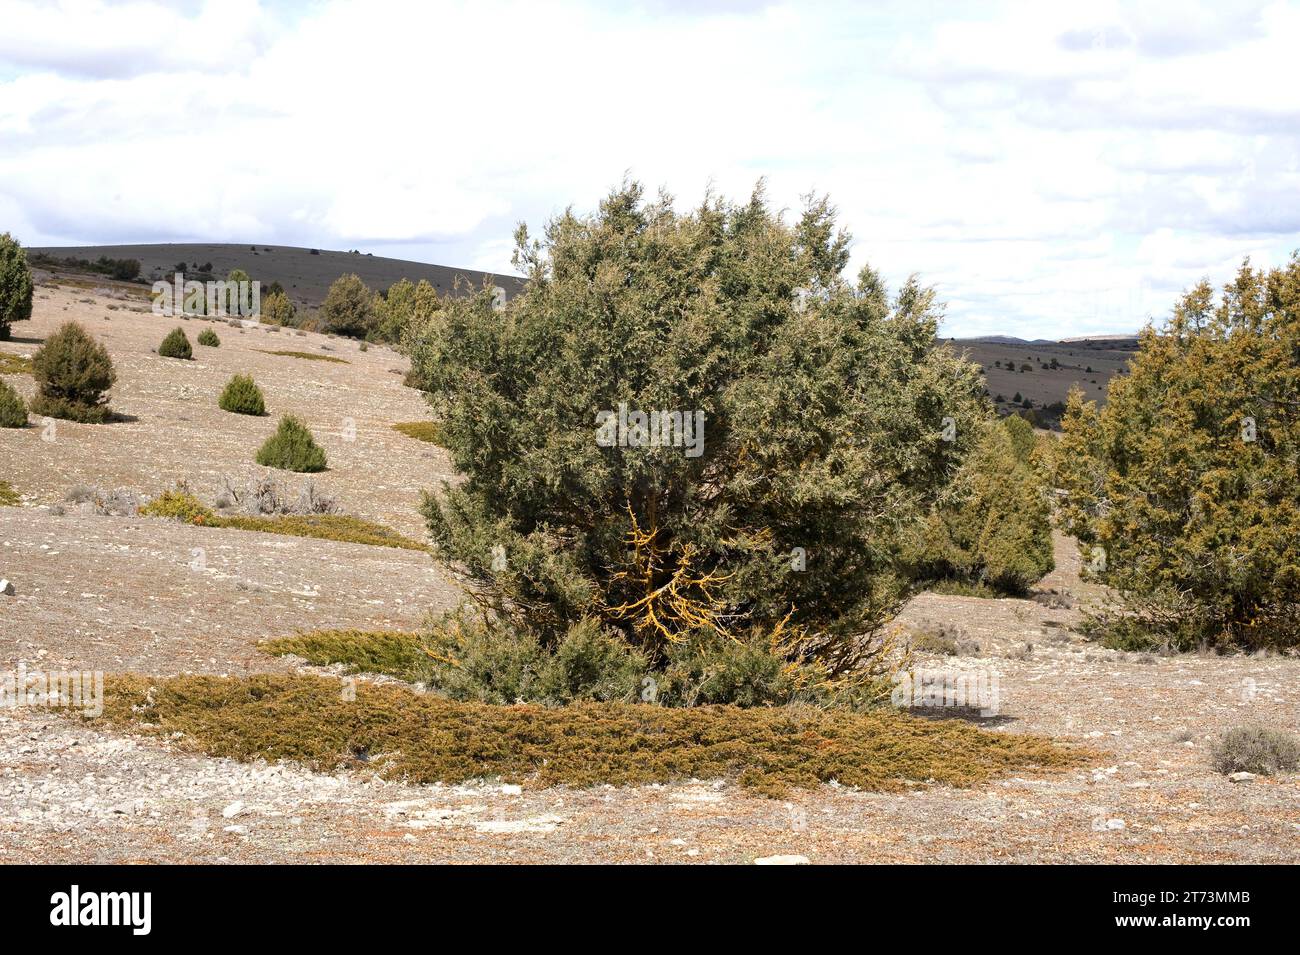 Spanish juniper (Juniperus thurifera) is an evergreen tree native to western Mediterranean mountains, specially in Spain. Down Juniperus sabina. This Stock Photo